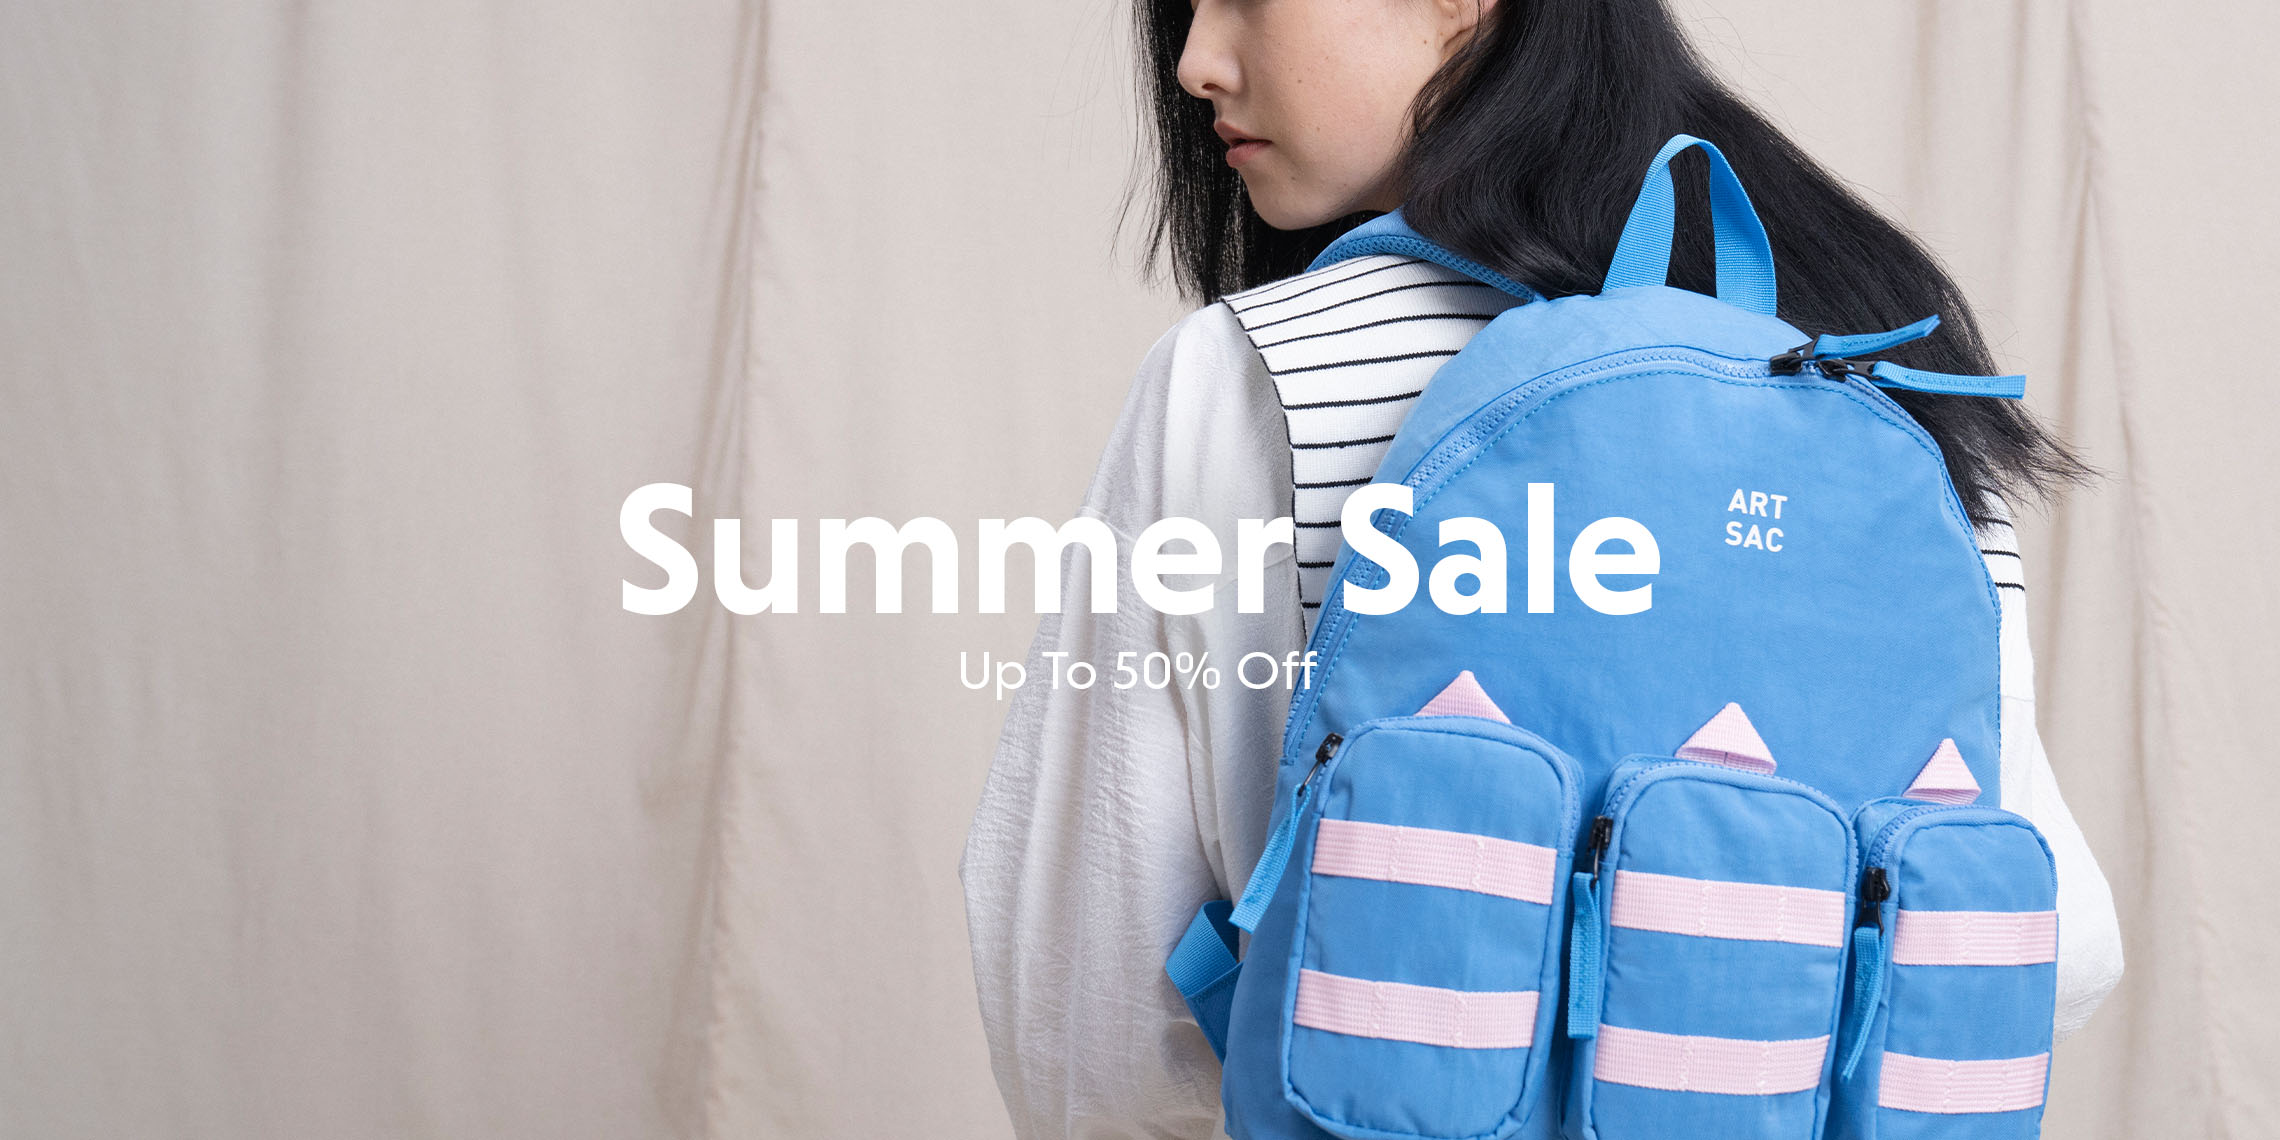 ARTSAC - Summer Sale